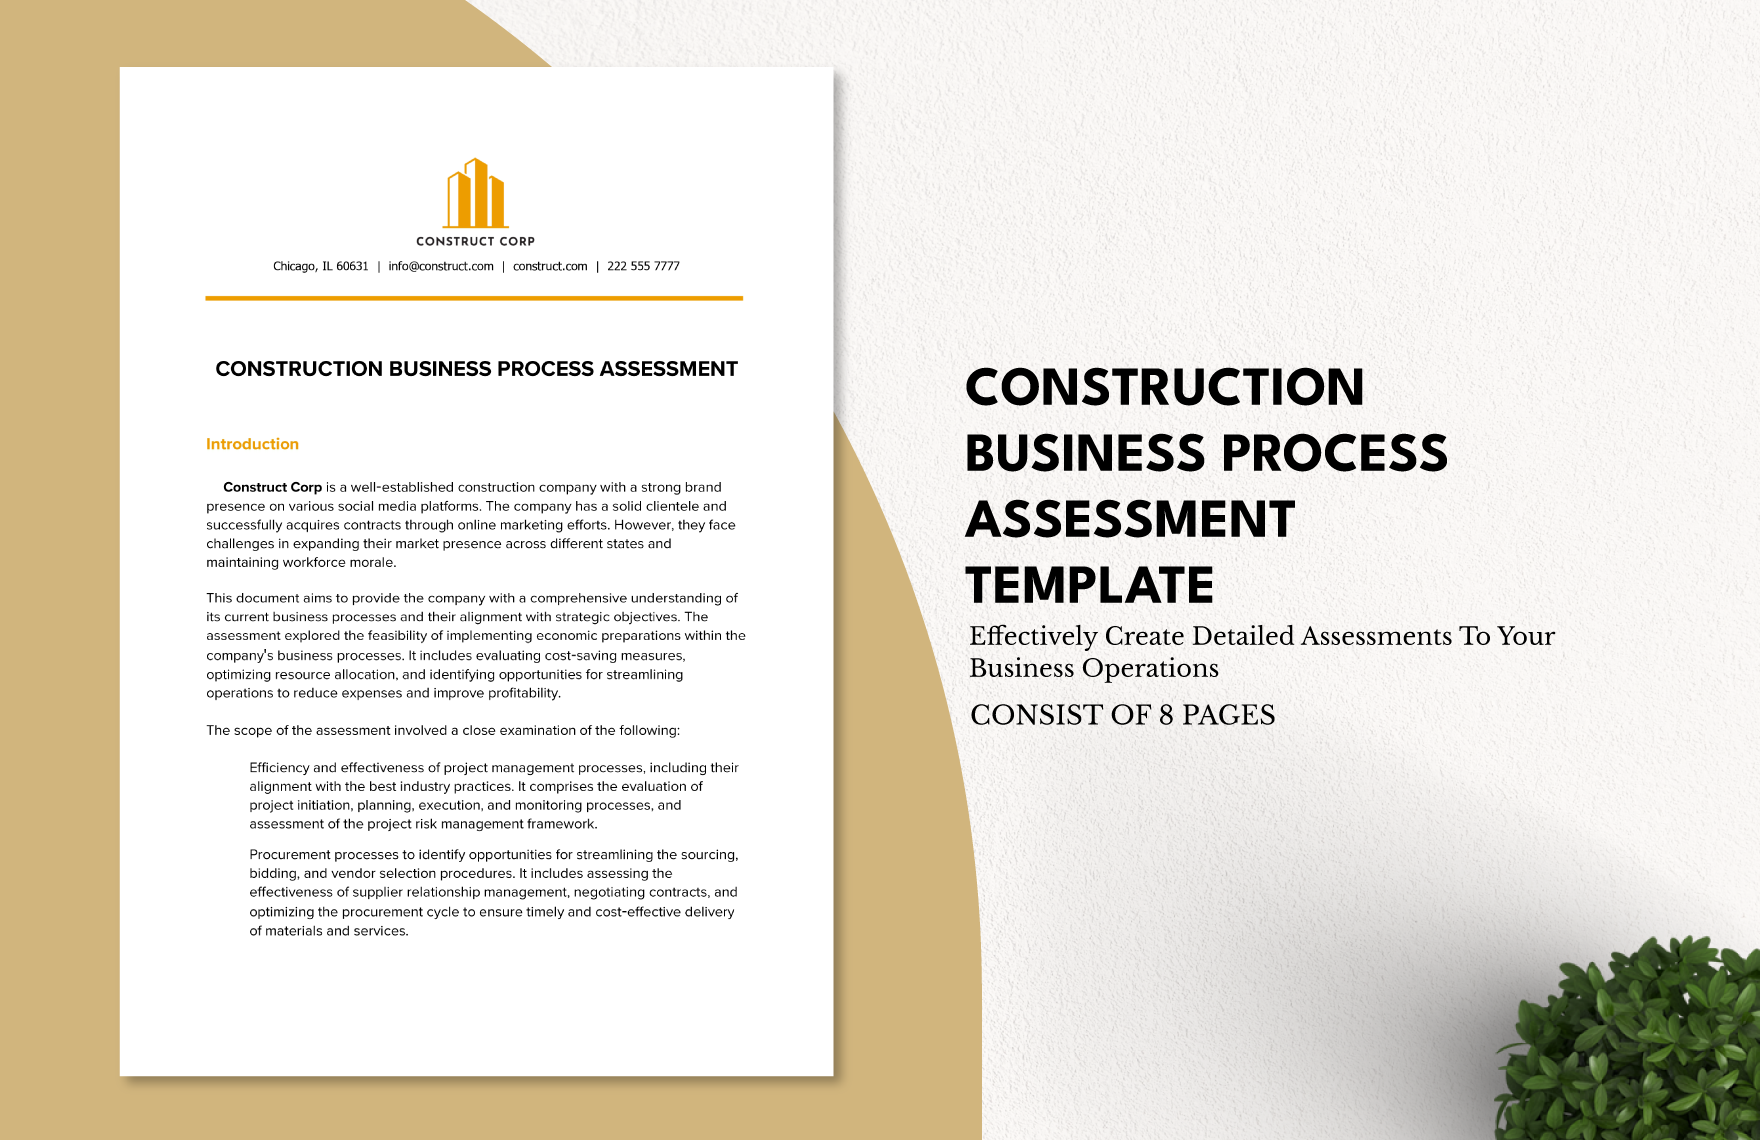 Construction Business Process Assessment Template